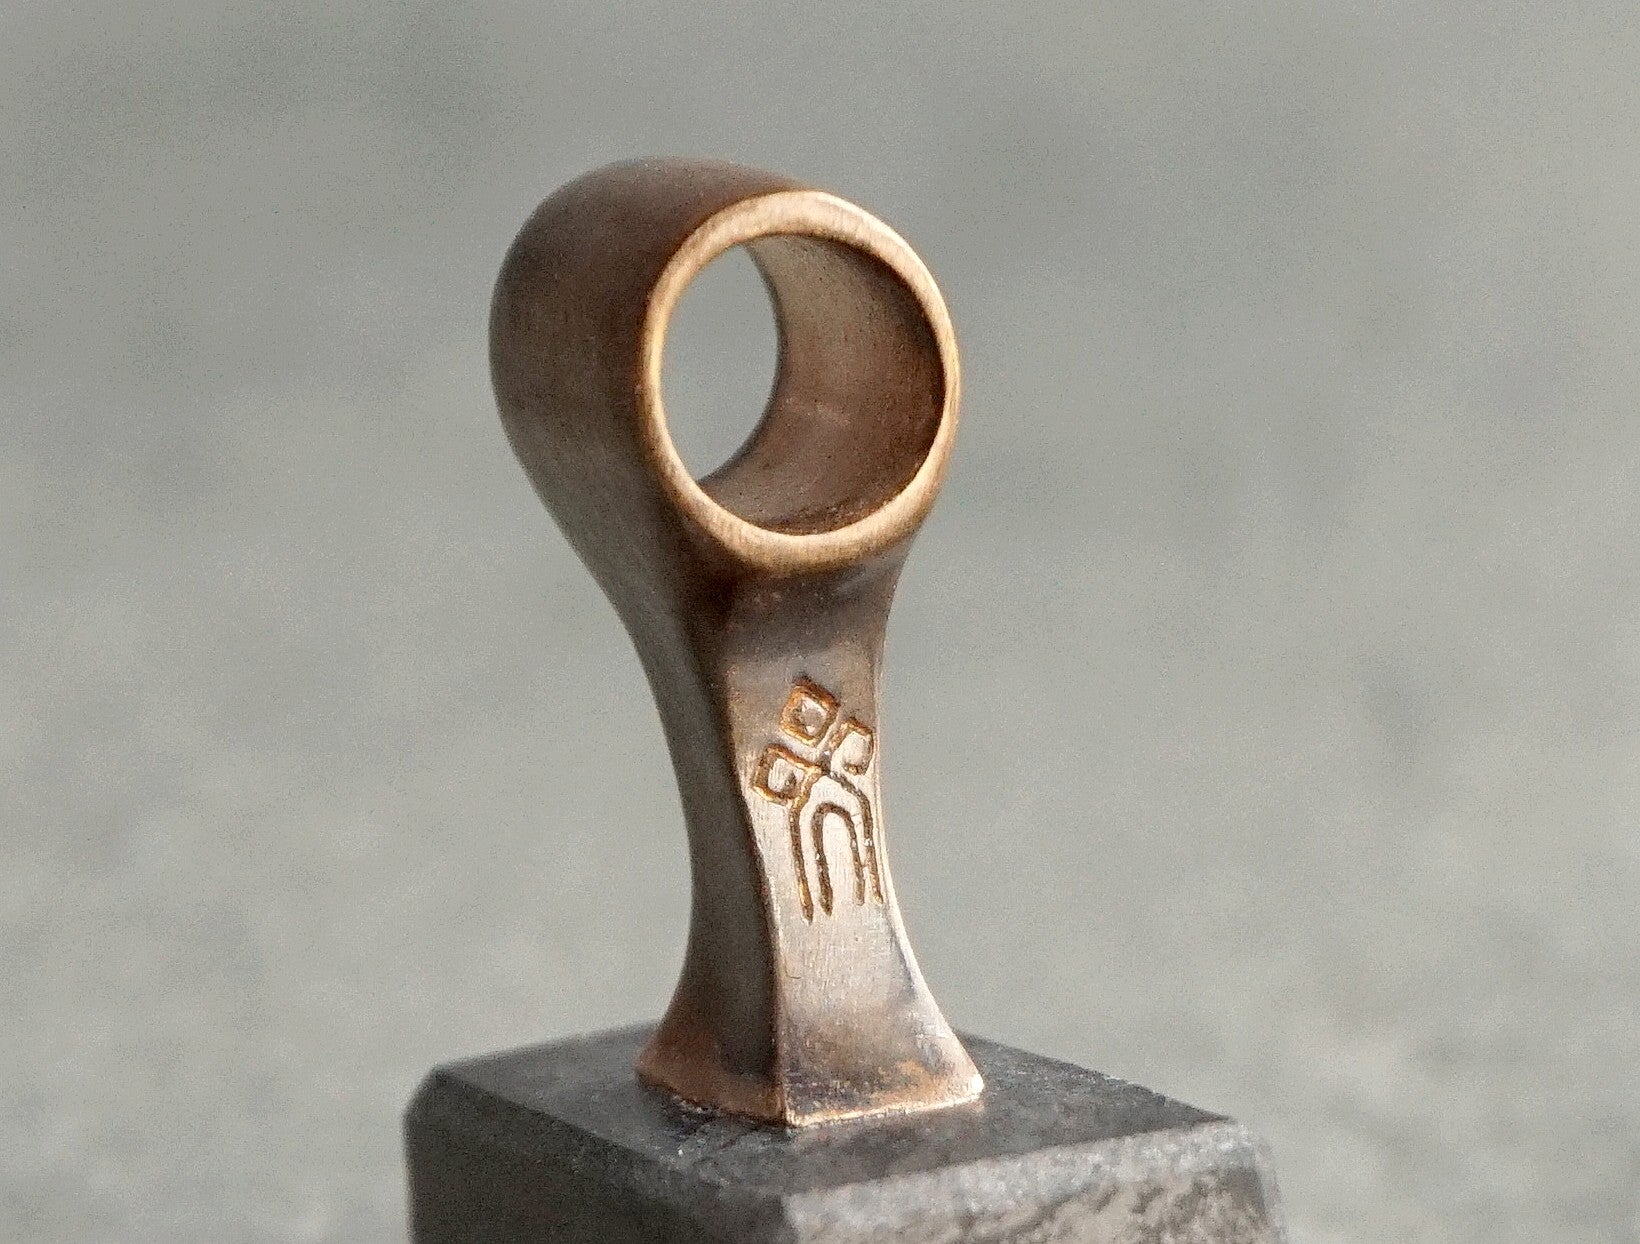 shop's logo 'Yachur' on the pendant